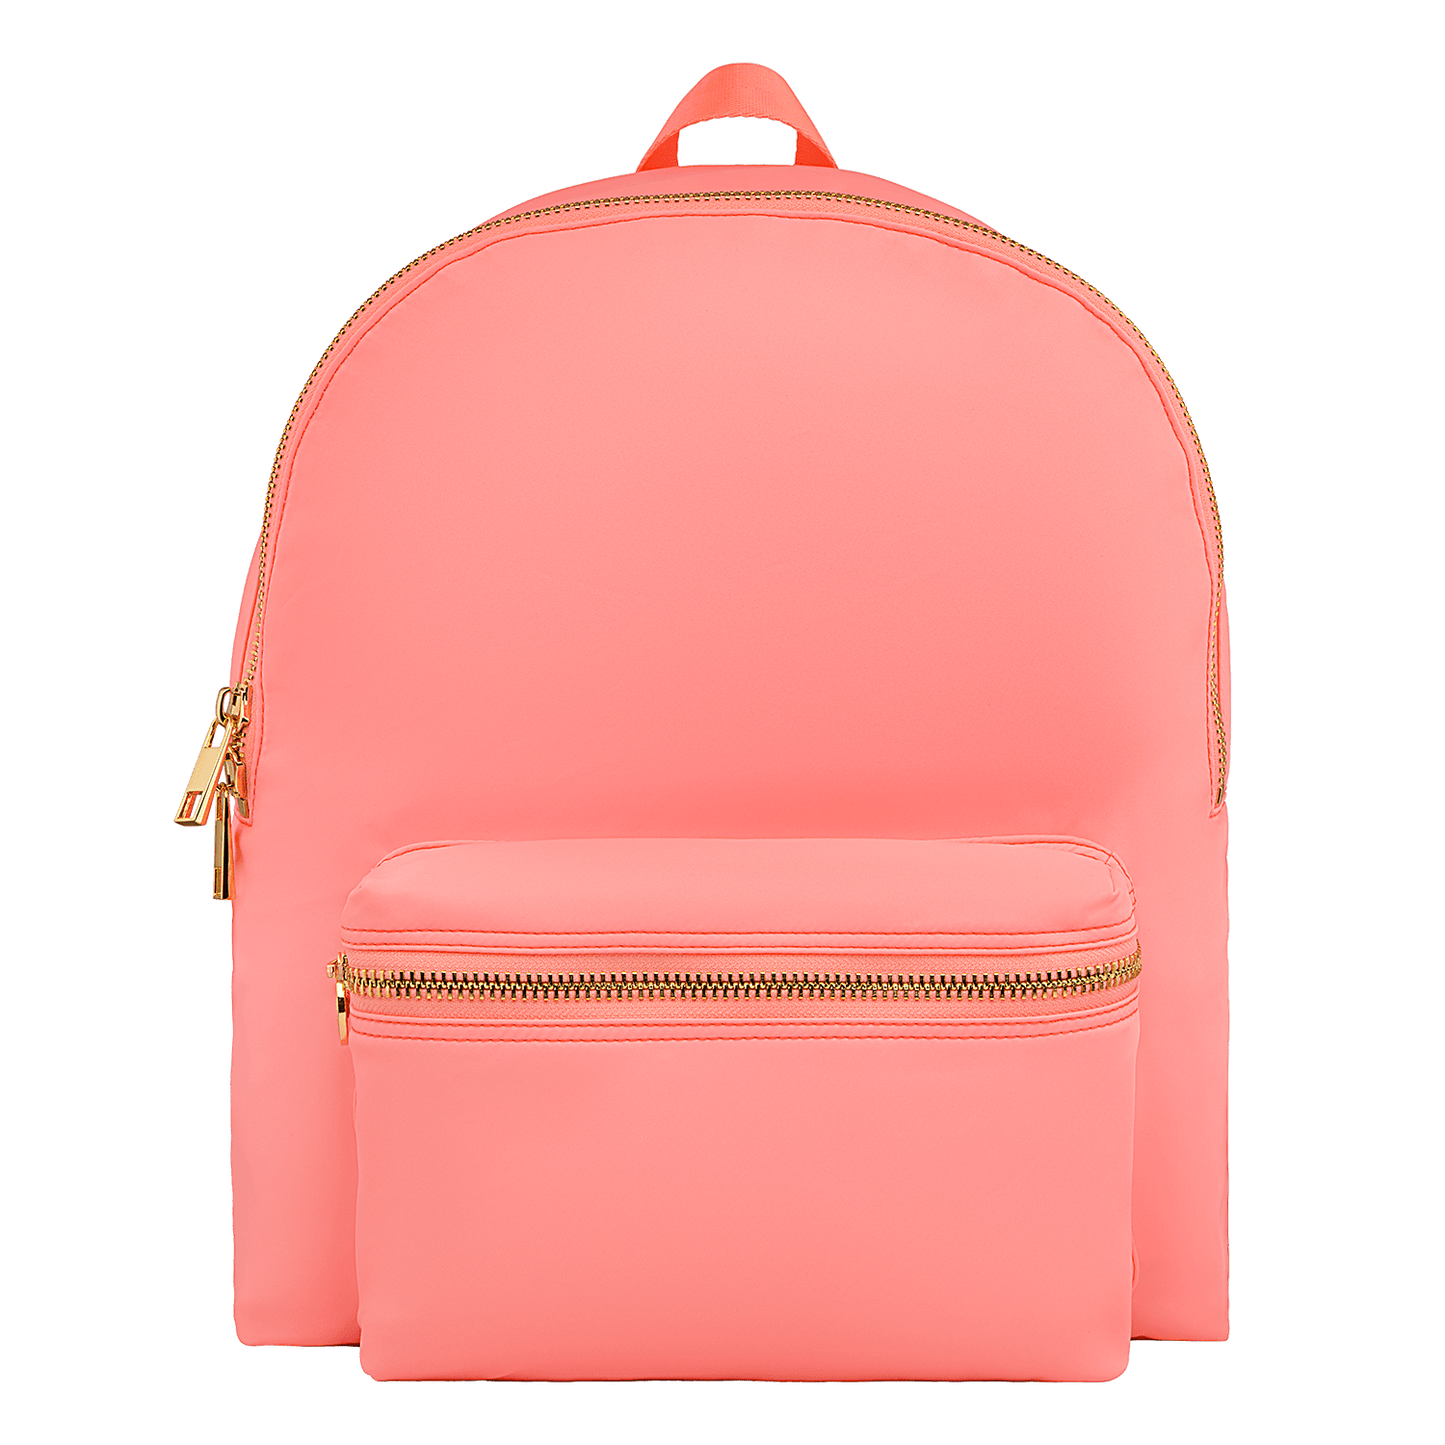 Classic Backpack in Mango - Customizable